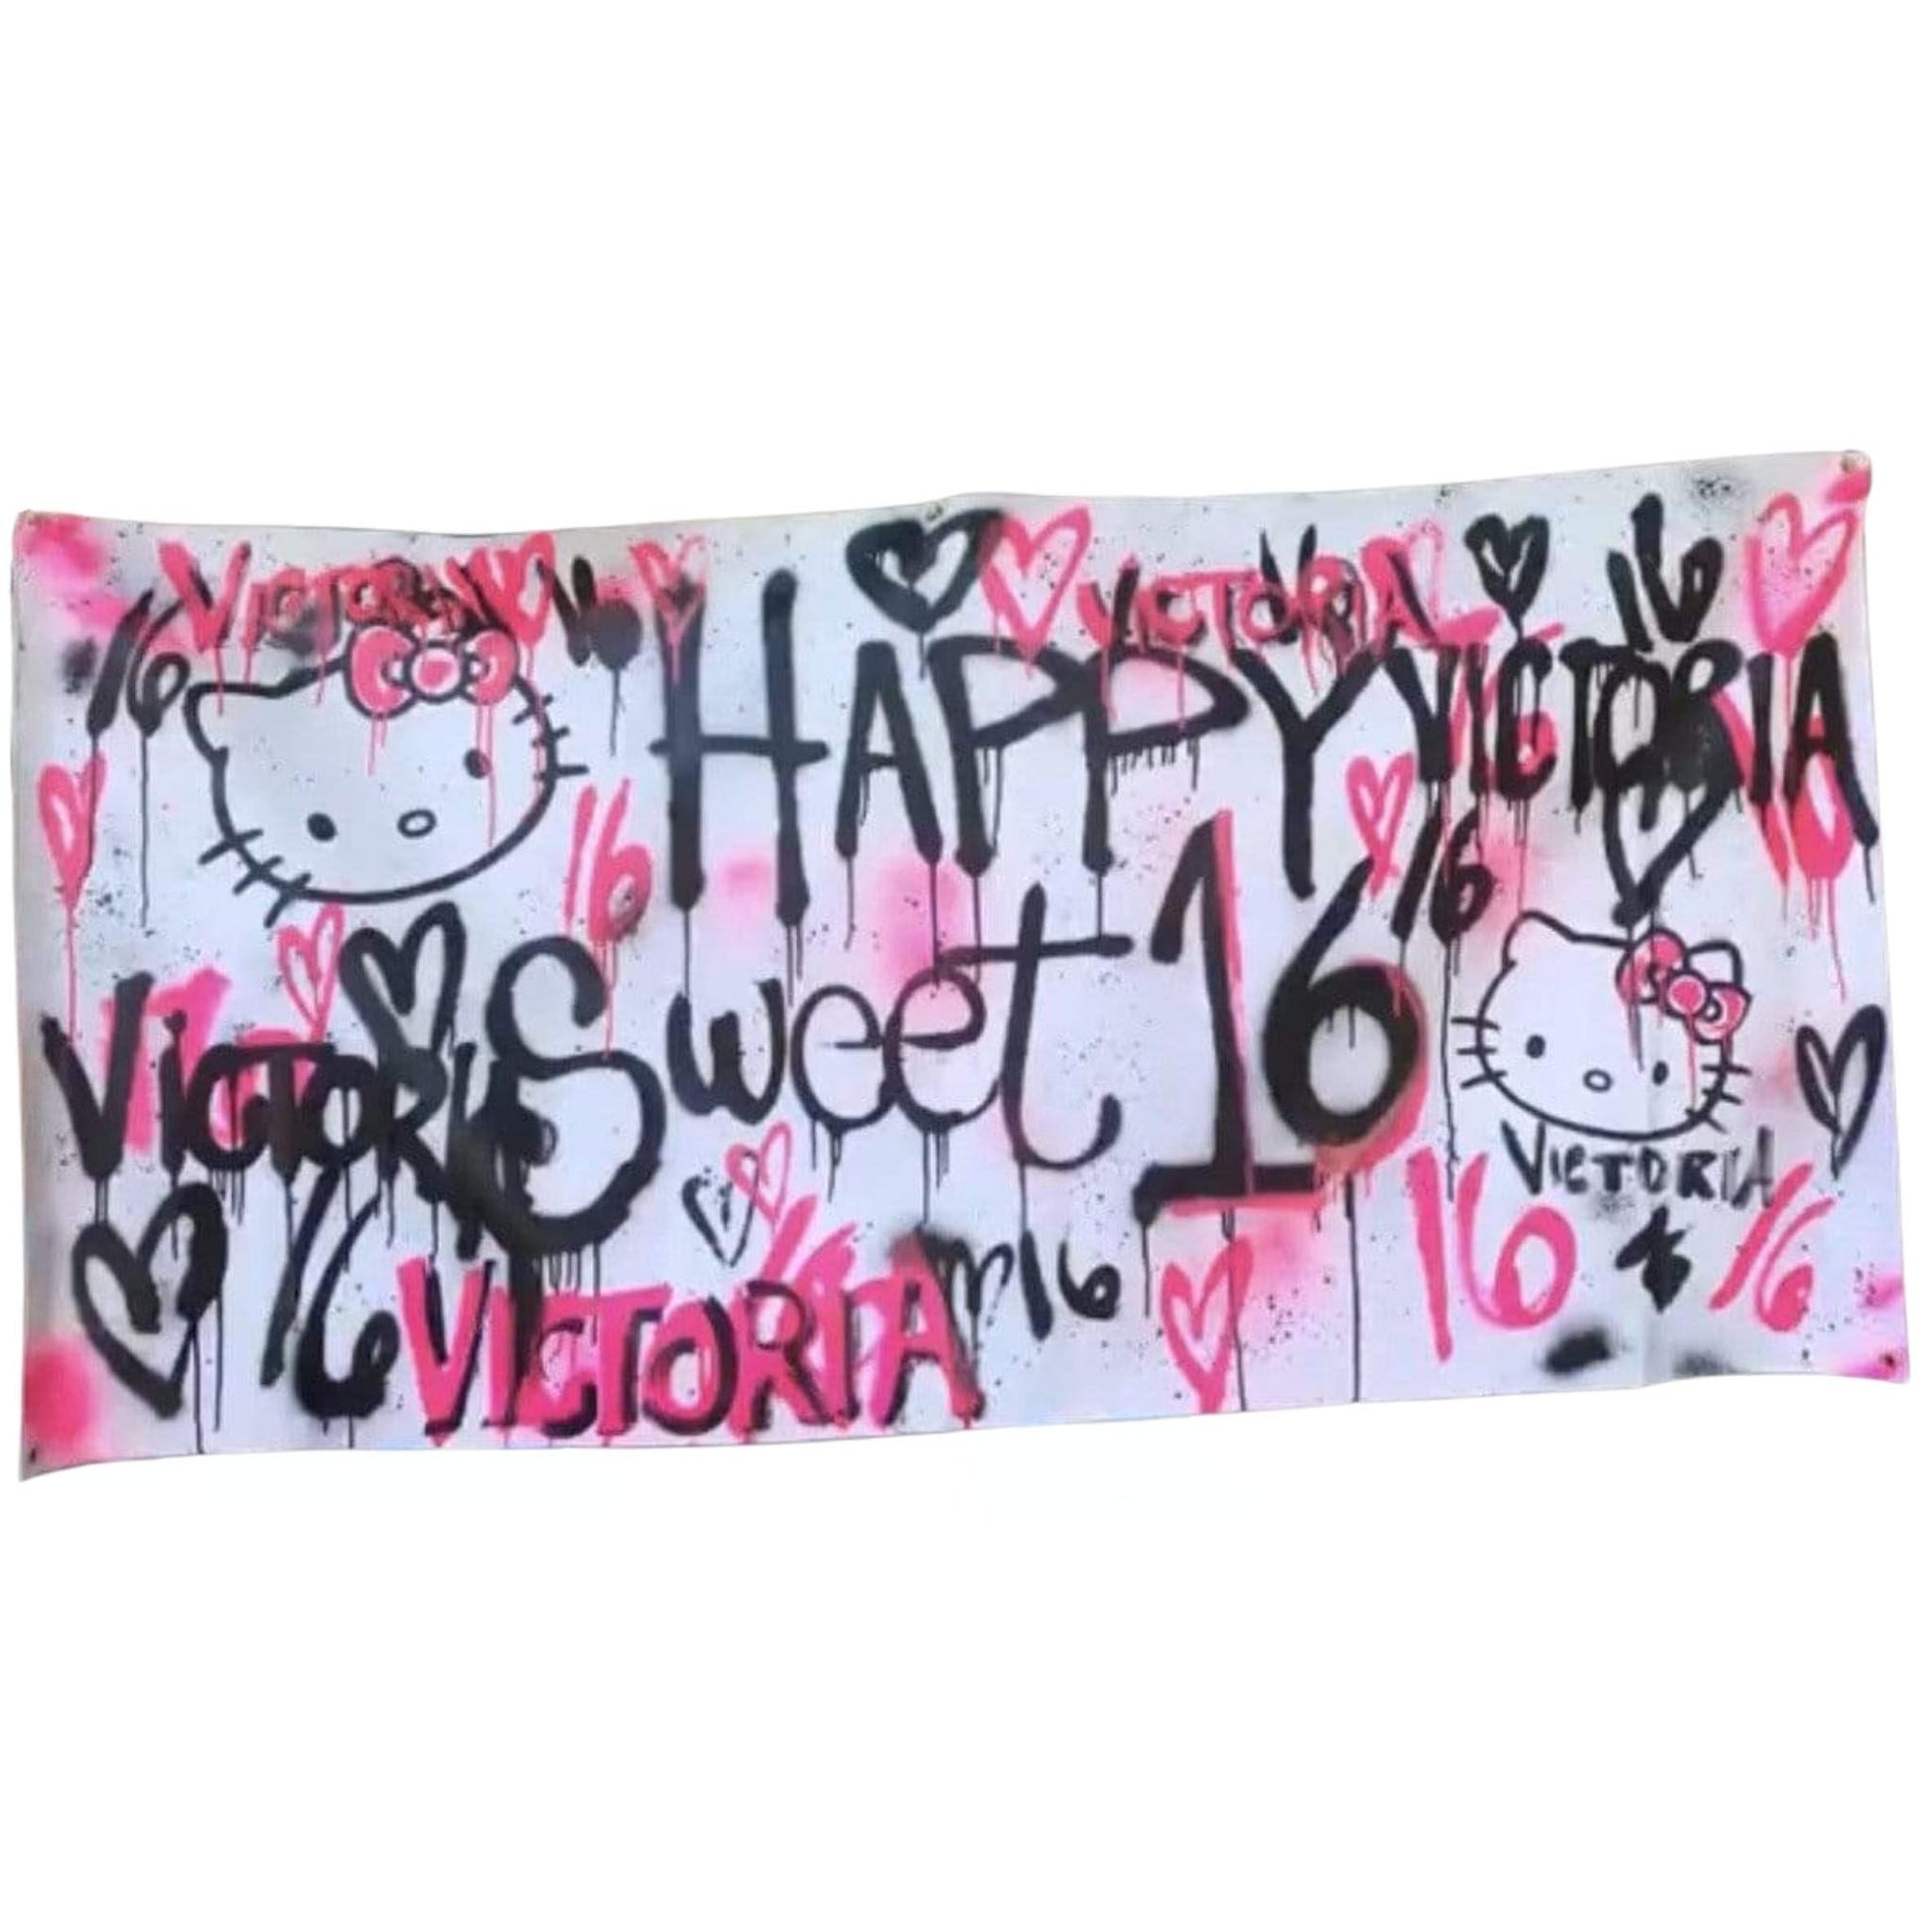 Graffiti Banner - a Spirit Animal - Custom Birthday Banner $105-$120 banner Custom Birthday Banner